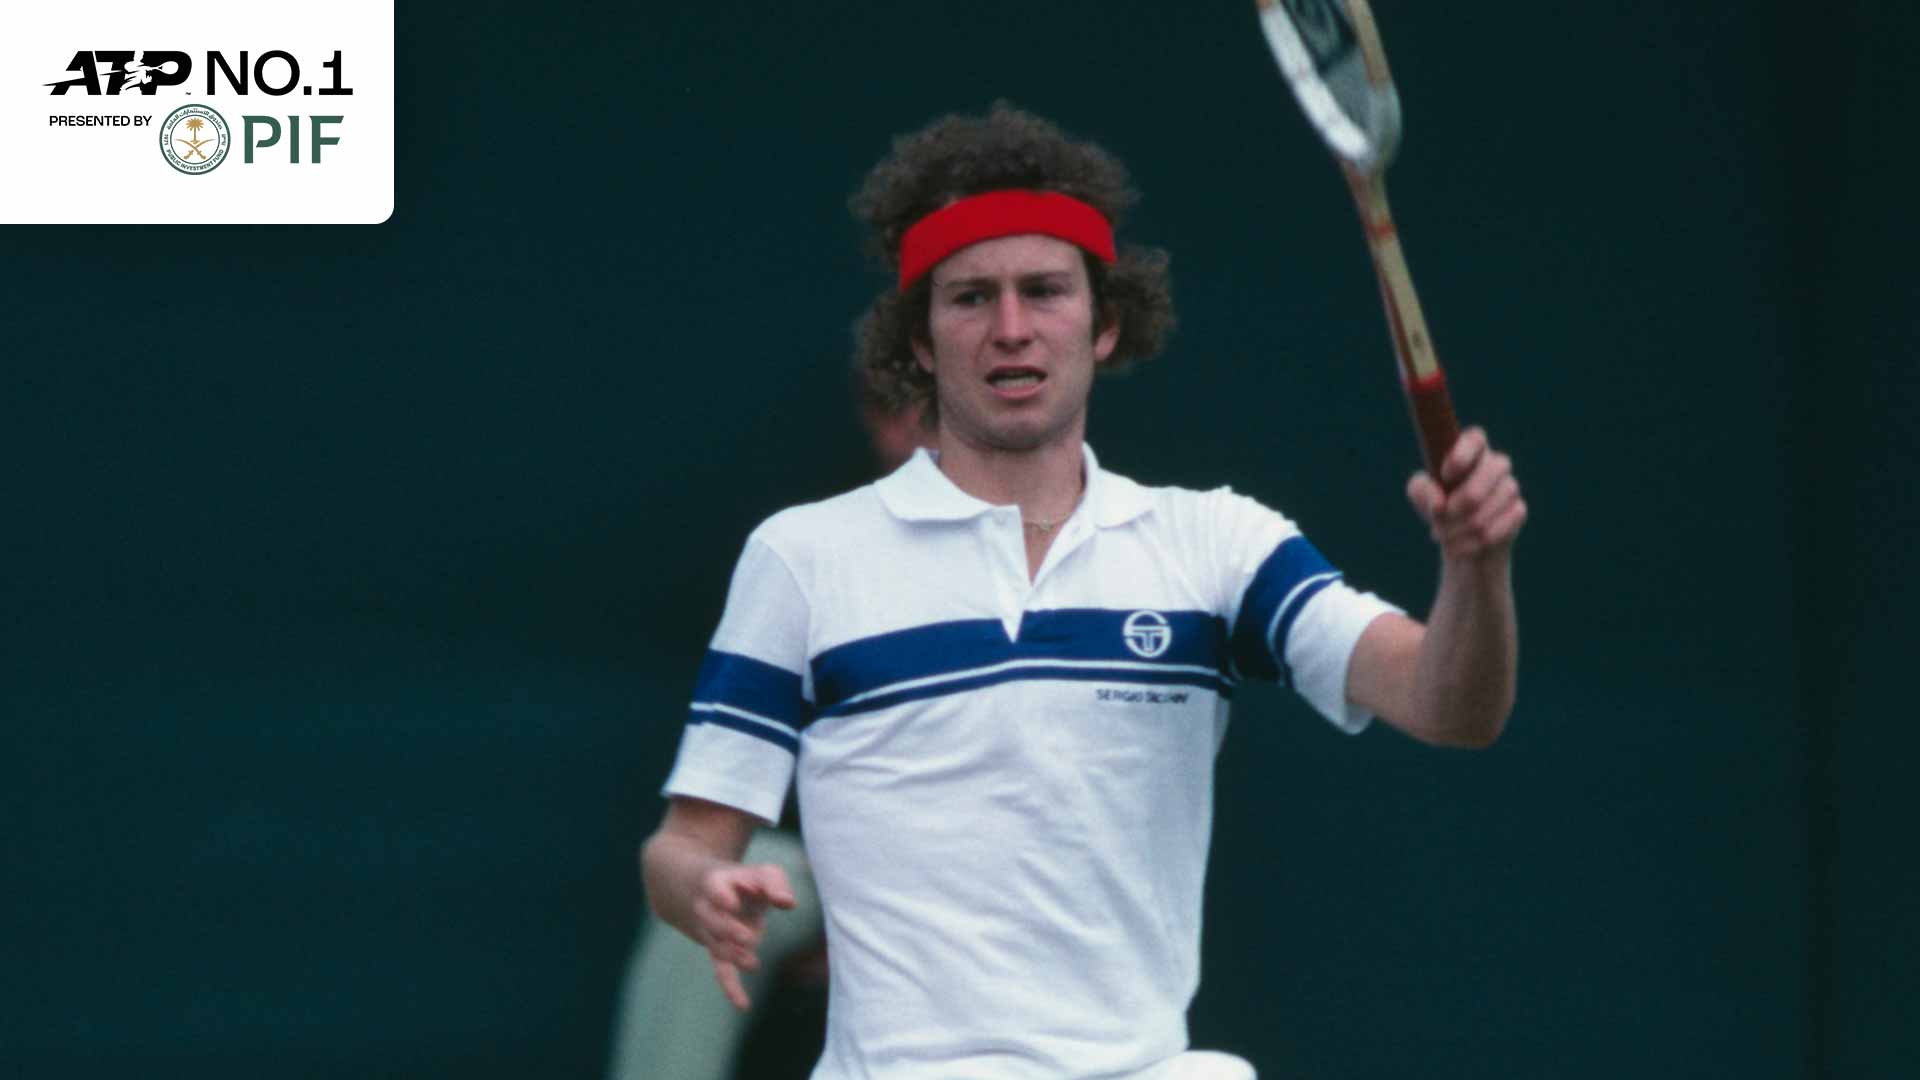 El estadounidense John McEnroe, quinto jugador en ascender al No. 1.